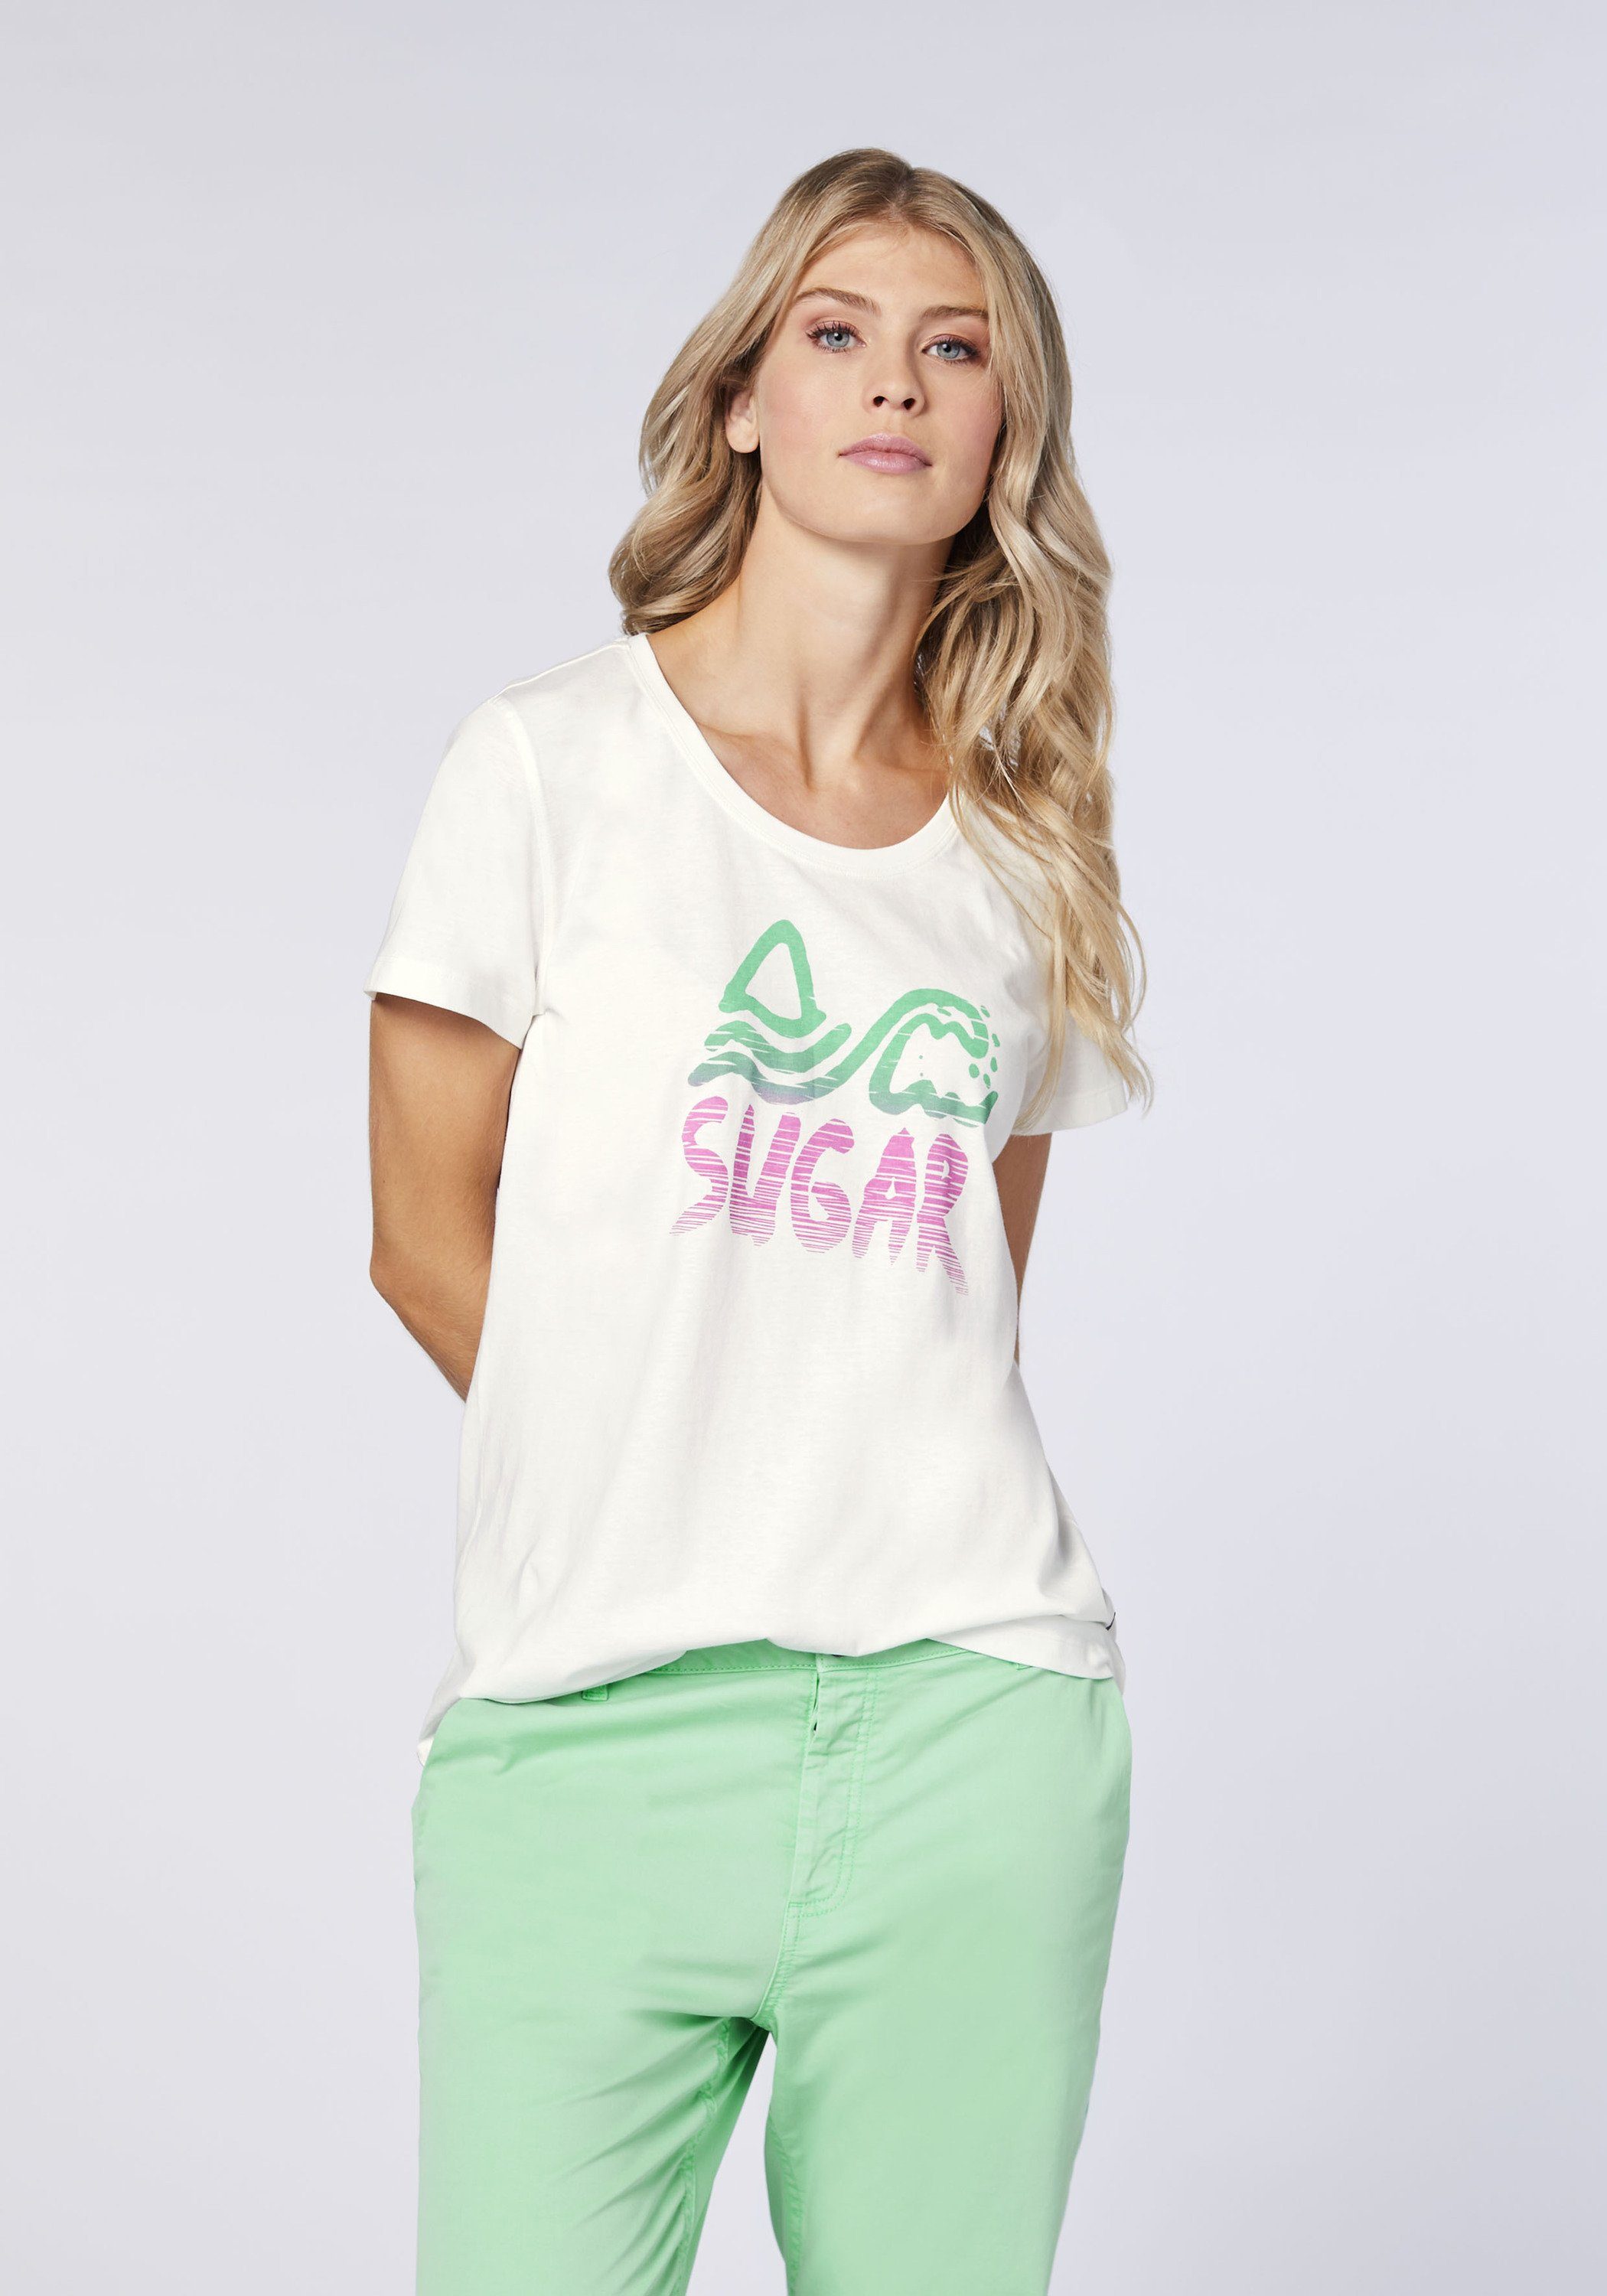 T-Shirt White/Light Pink Frontprint mit farbenfrohem Chiemsee 1 Print-Shirt